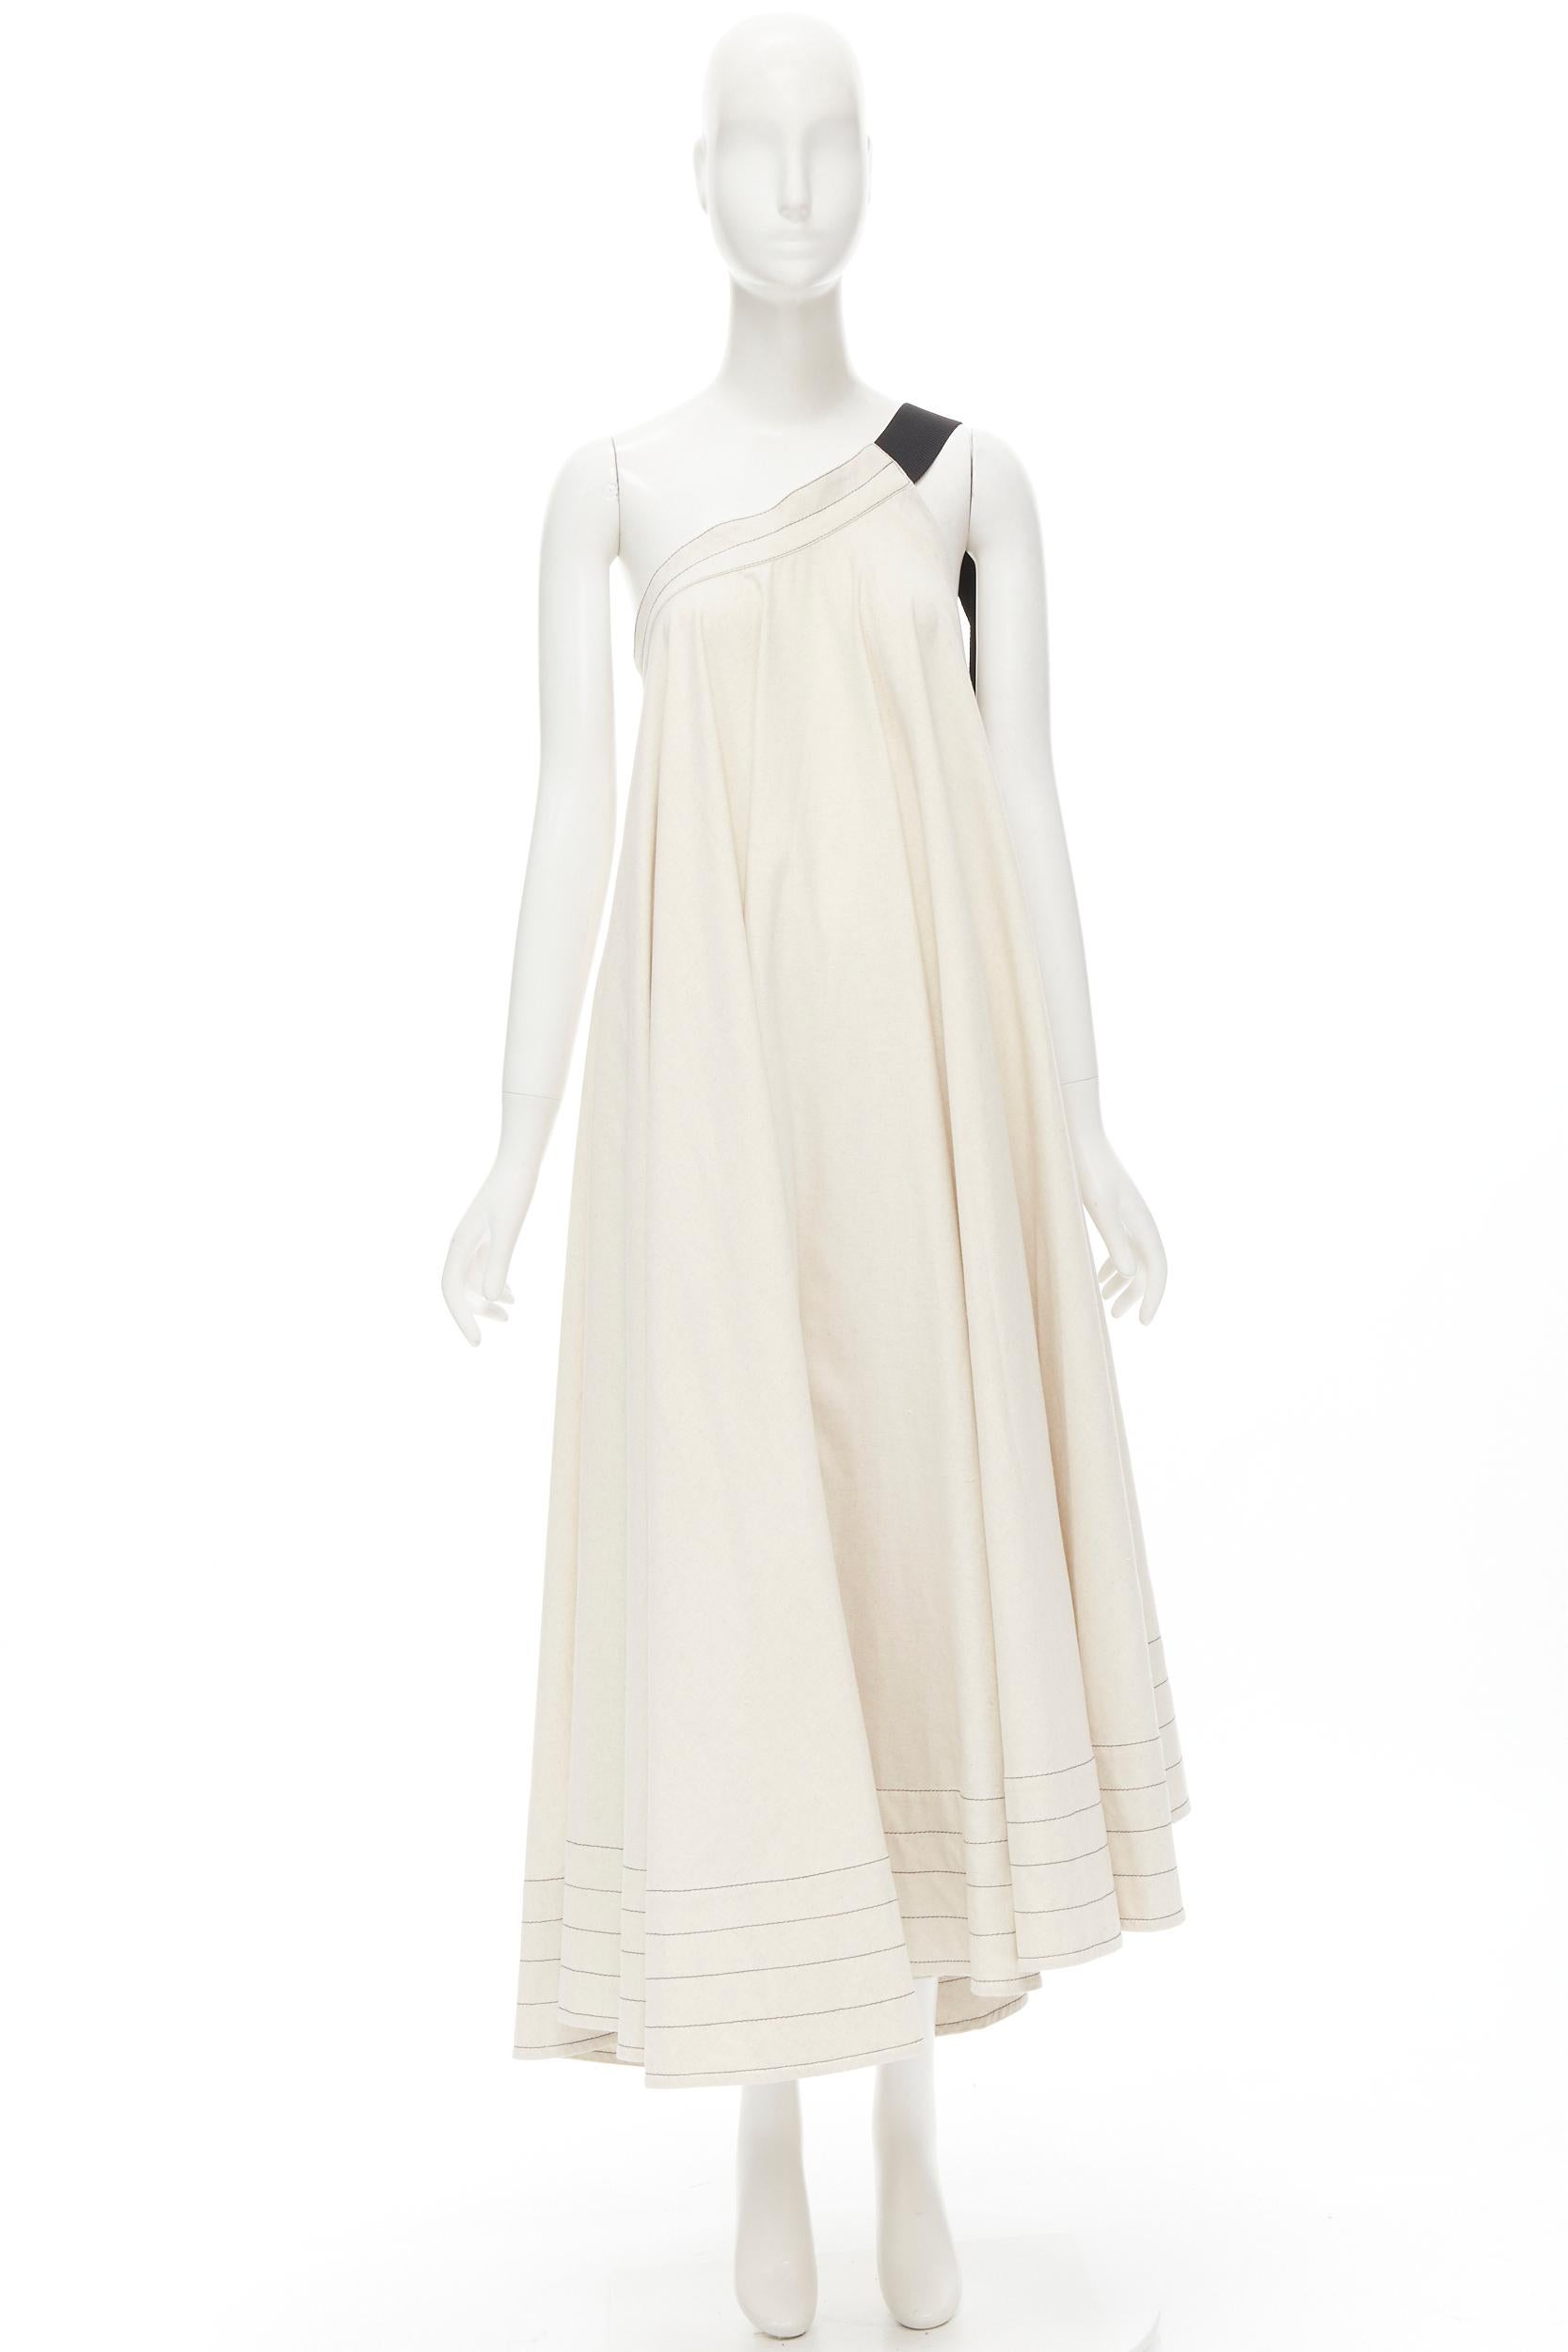 ARTCLUB natural beige 100% linen black one shoulder tent dress  S For Sale 4